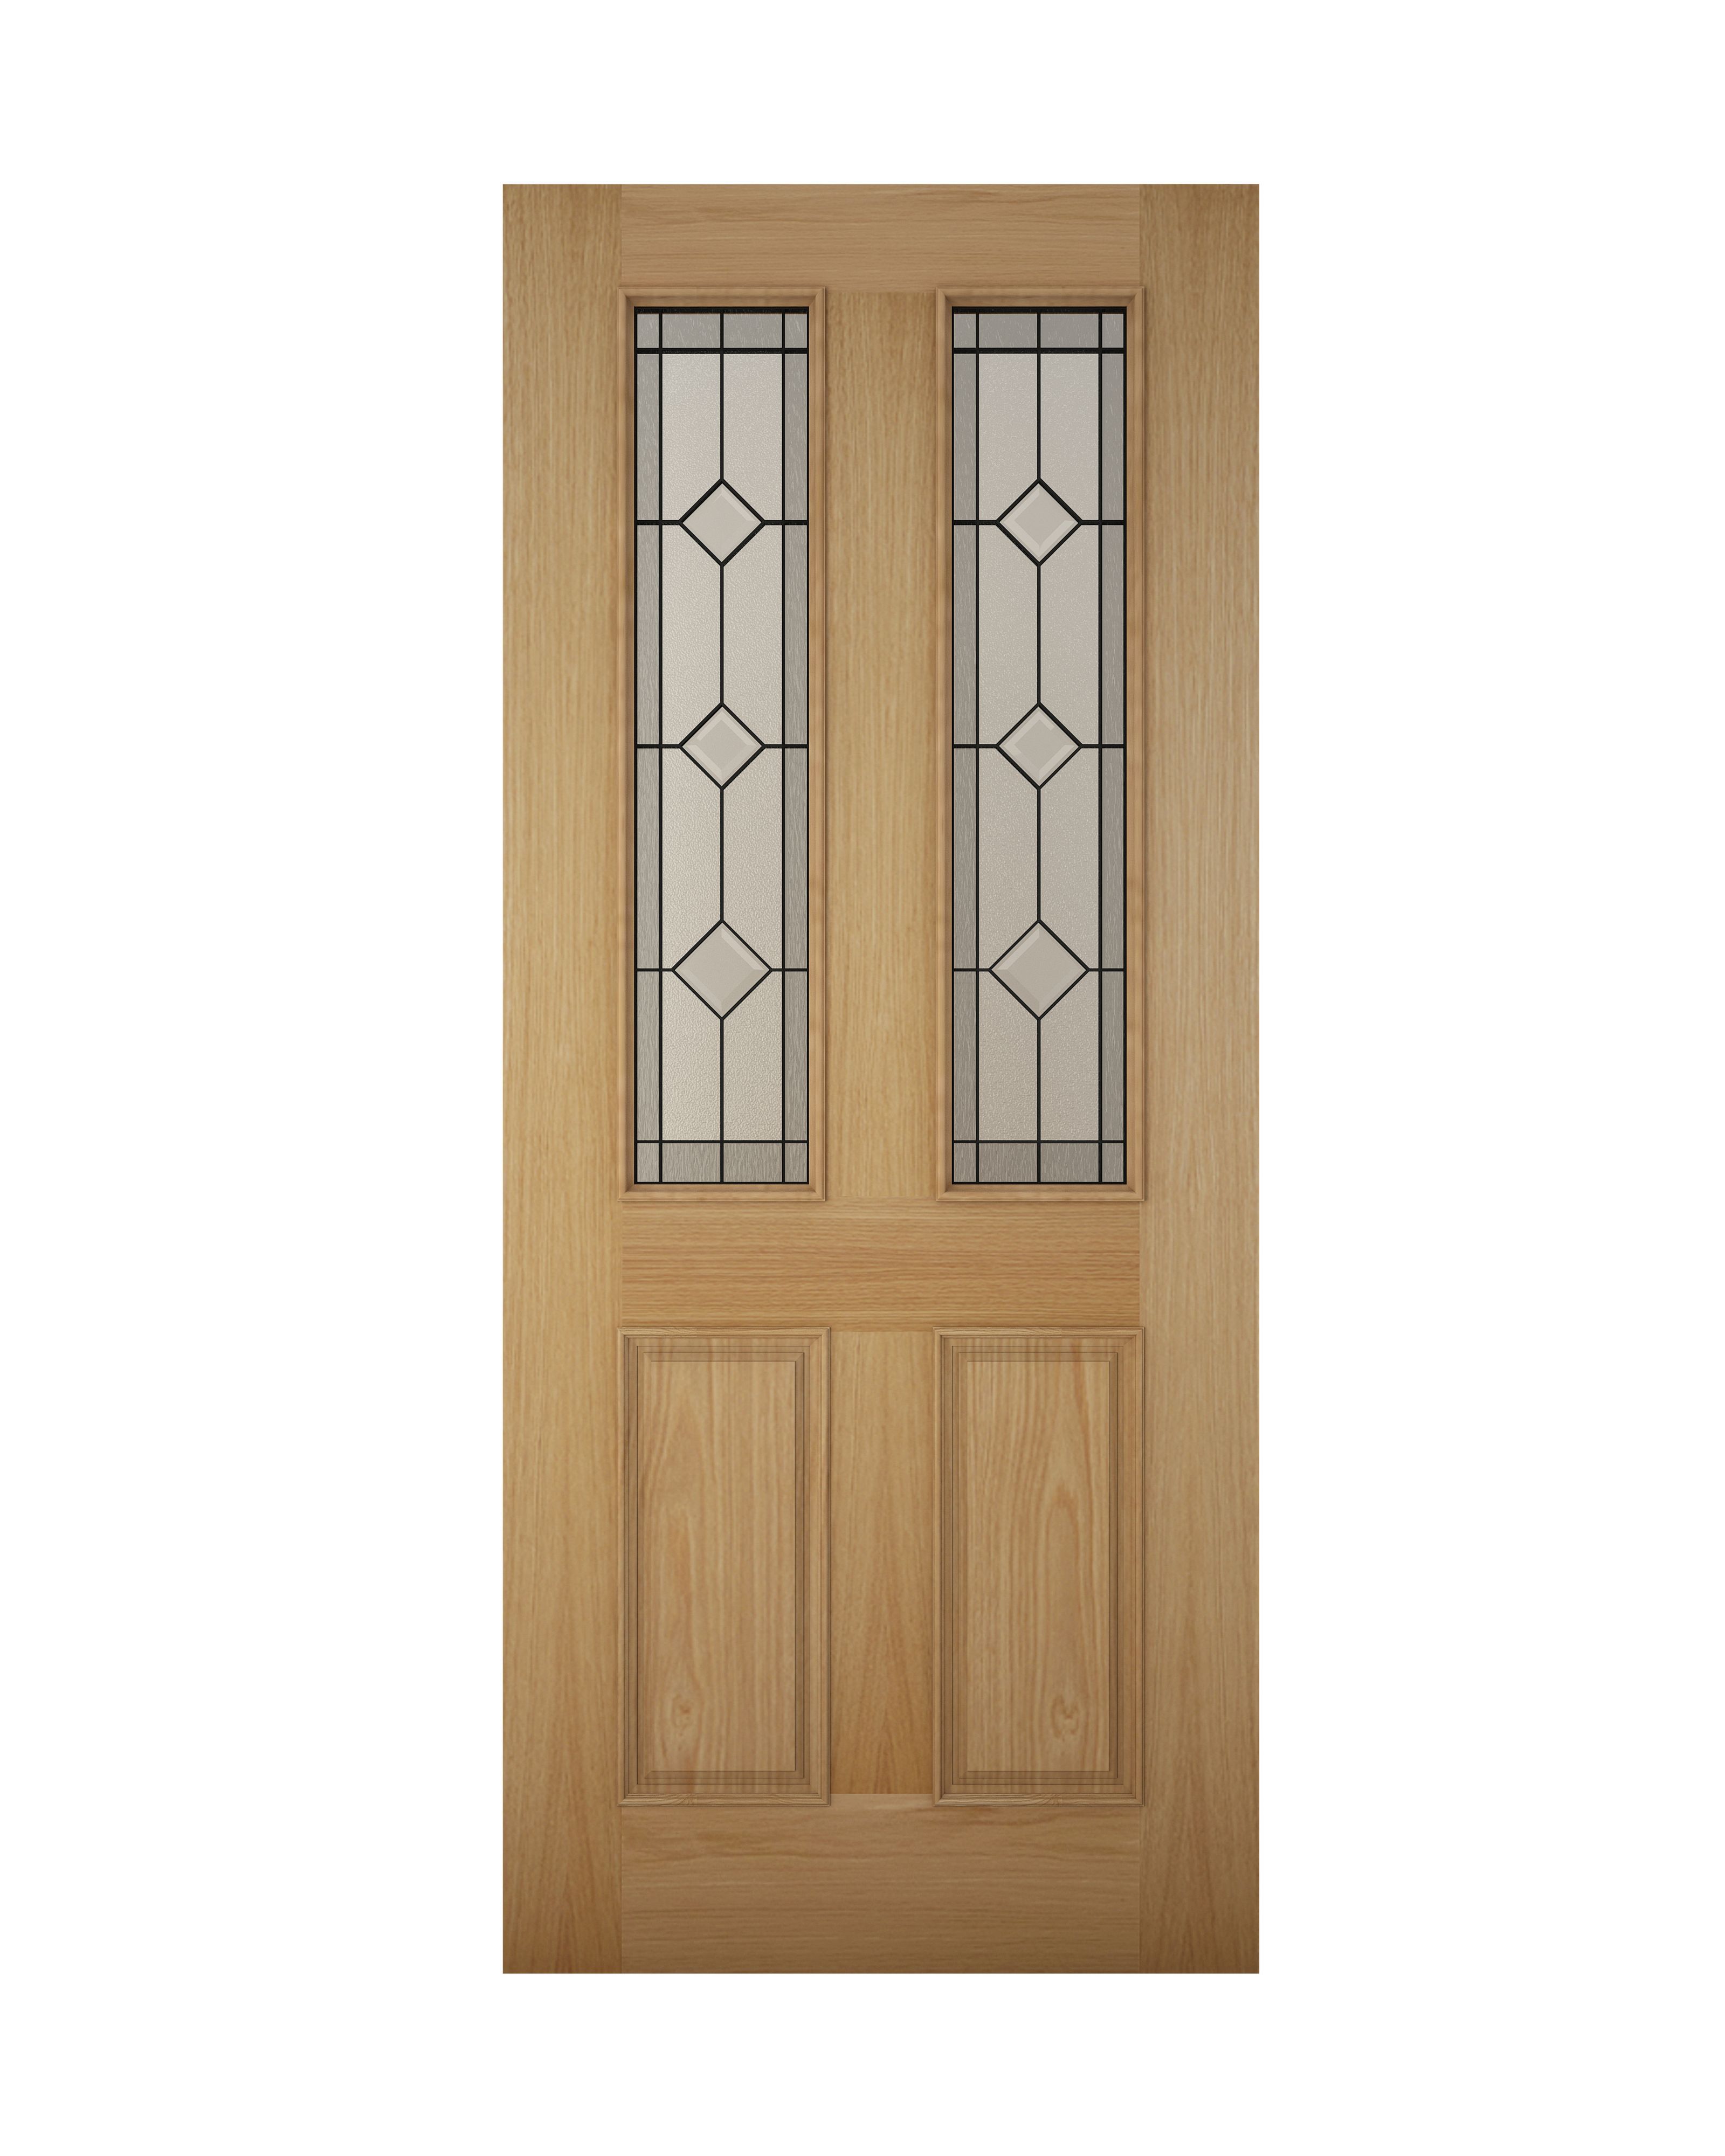 4 panel Diamond bevel Glazed Raised moulding White oak veneer LH & RH External Front Door set, (H)2125mm (W)907mm